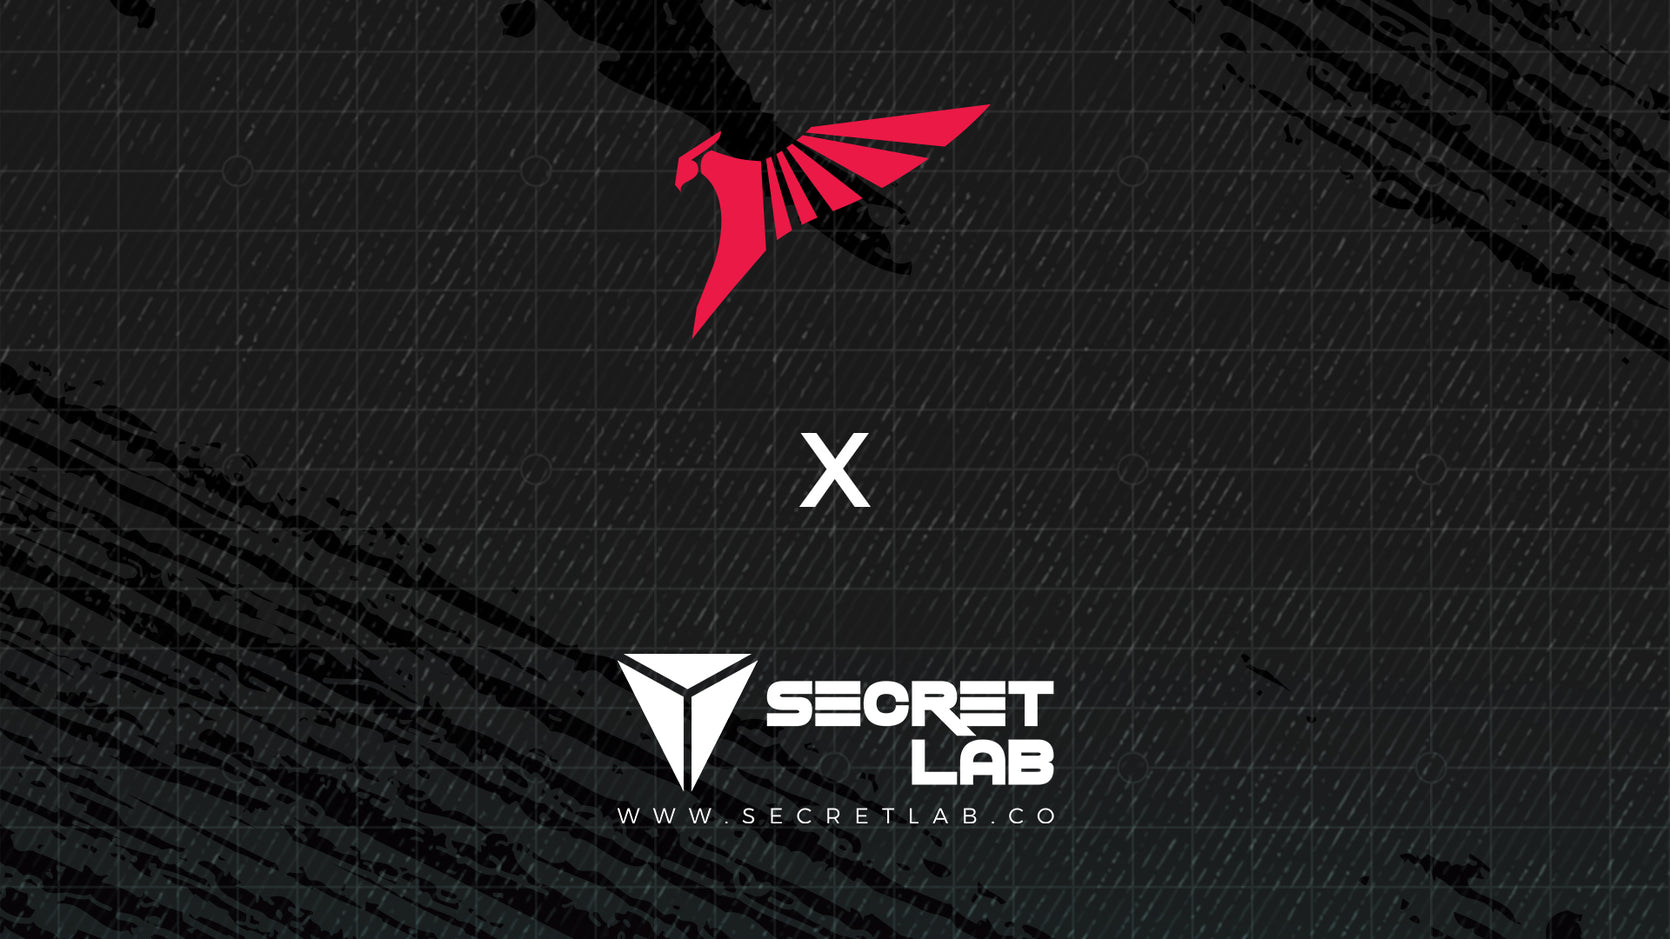 Secretlab x Valorant Esports